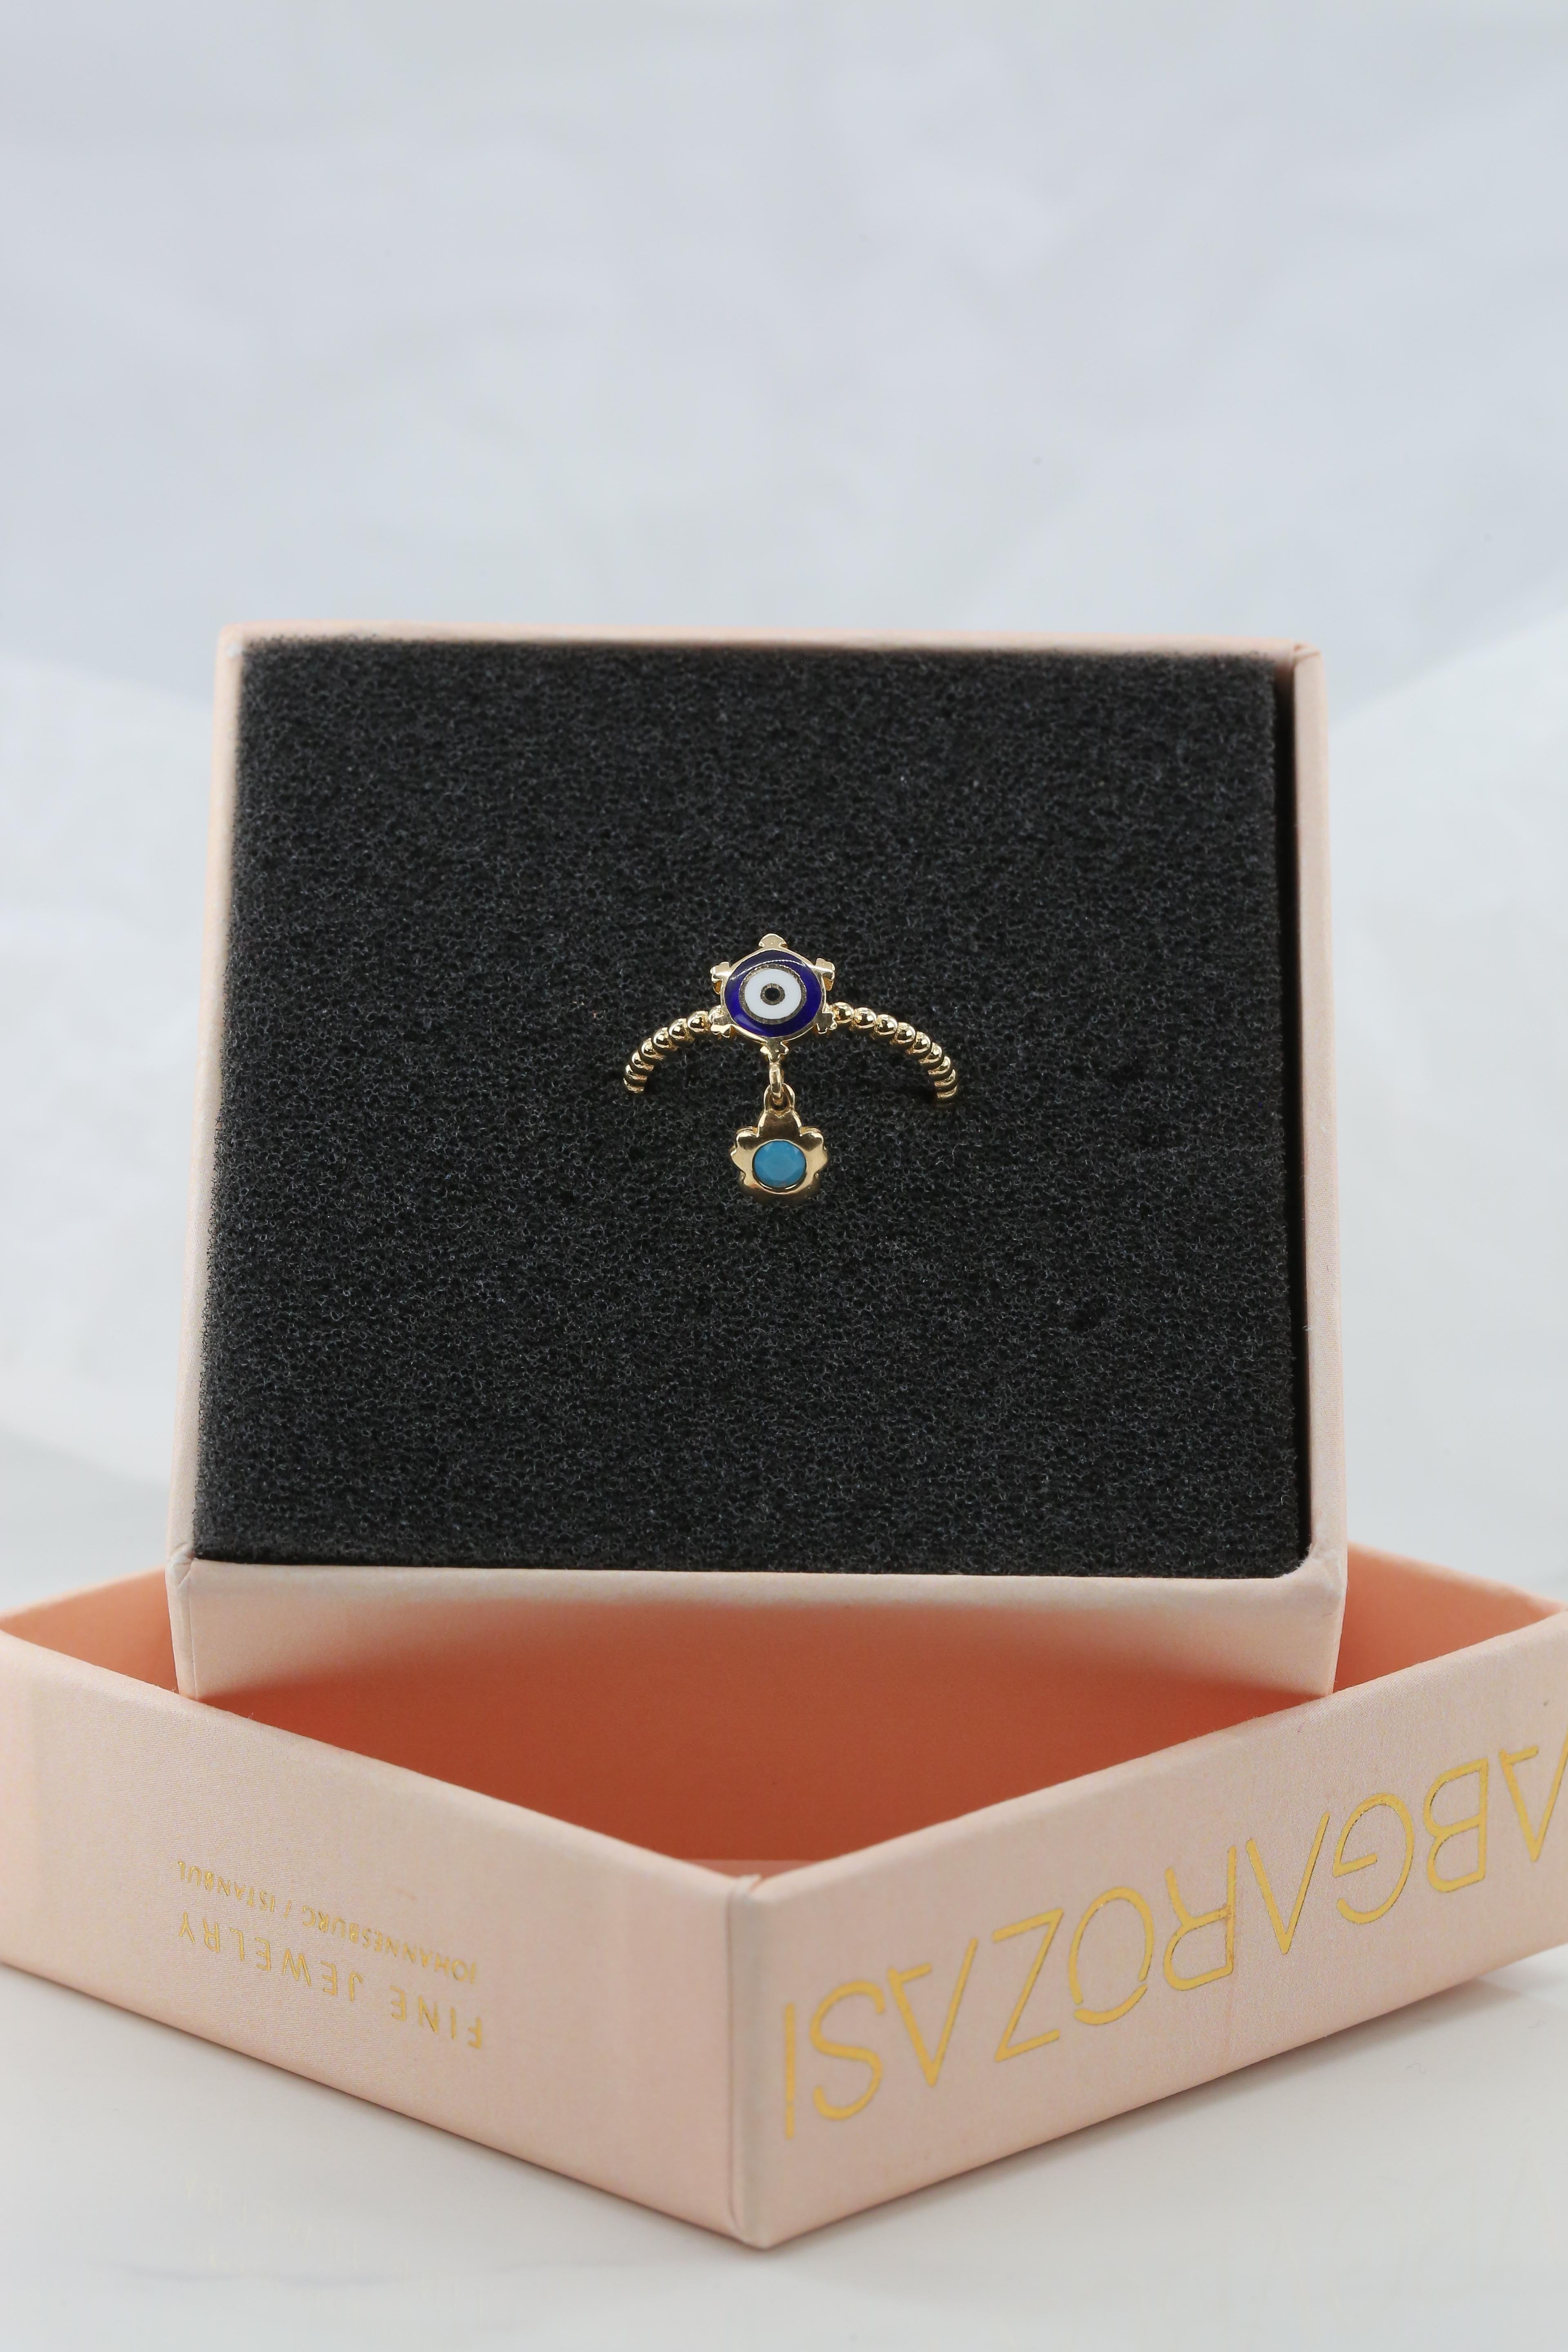 14K Gold Dainty Eye Enameled Rudder Ring with Turquoise Pendant 5